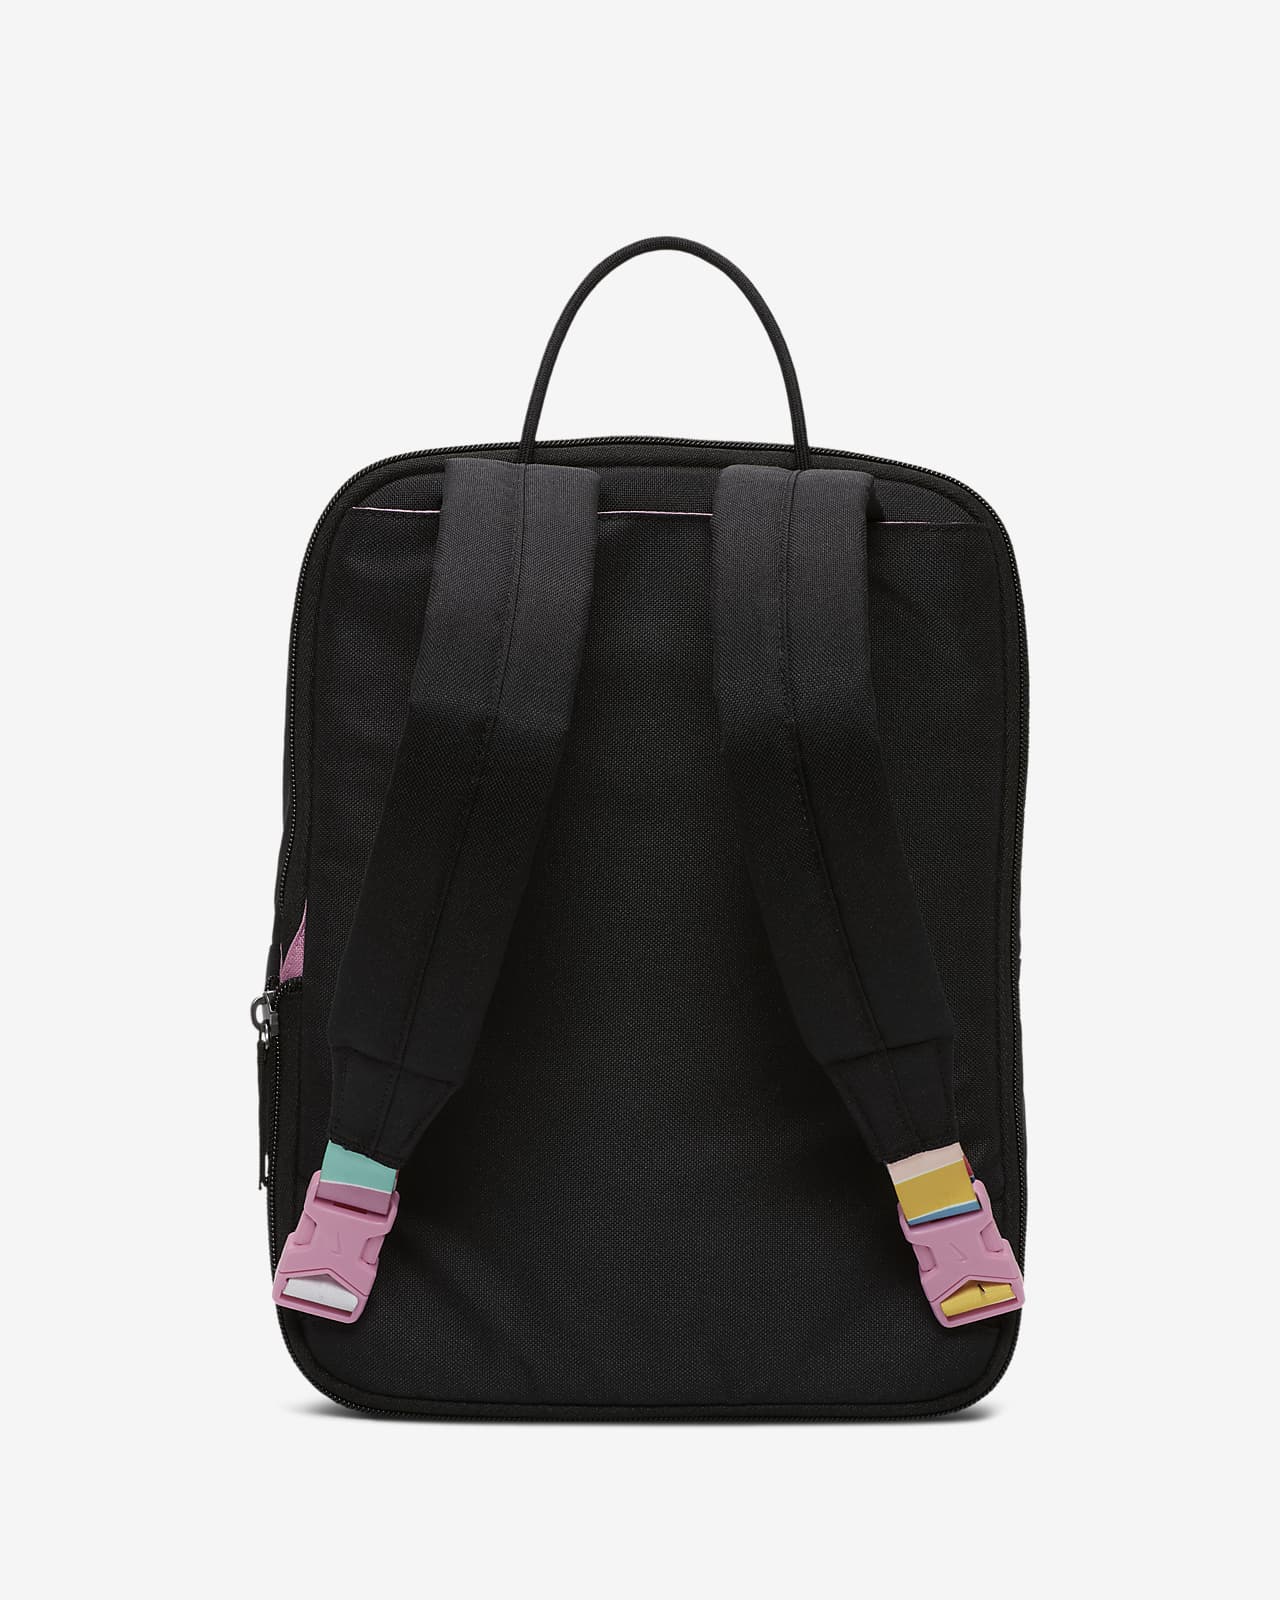 nike tanjun black backpack